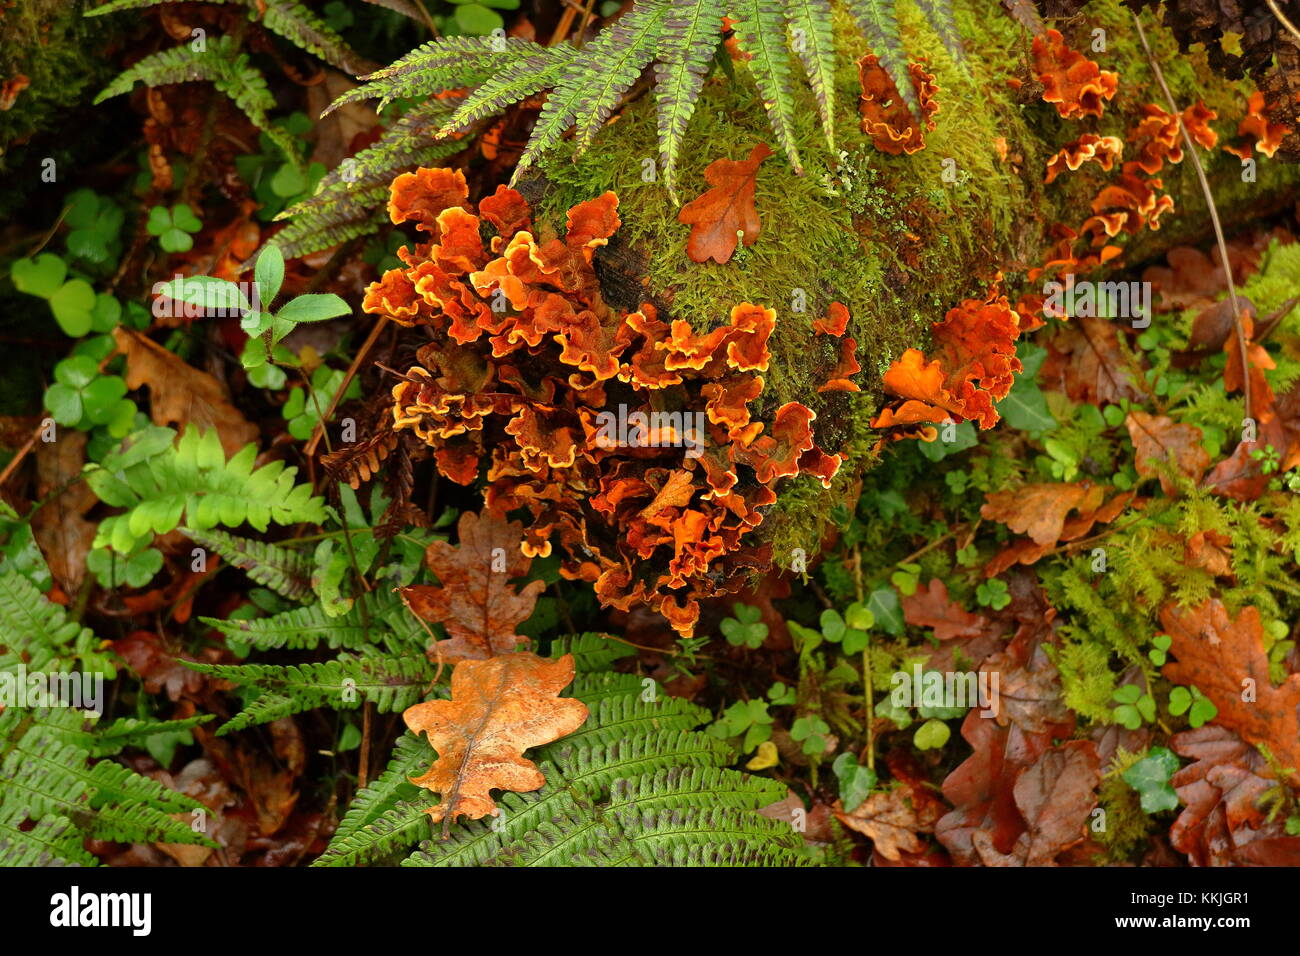 Hairy Stereum fungus Stereum hirsutum growing on old dead oak tree, among moss and ferns, Dartmoor, Devon, UK, December 2017 Stock Photo